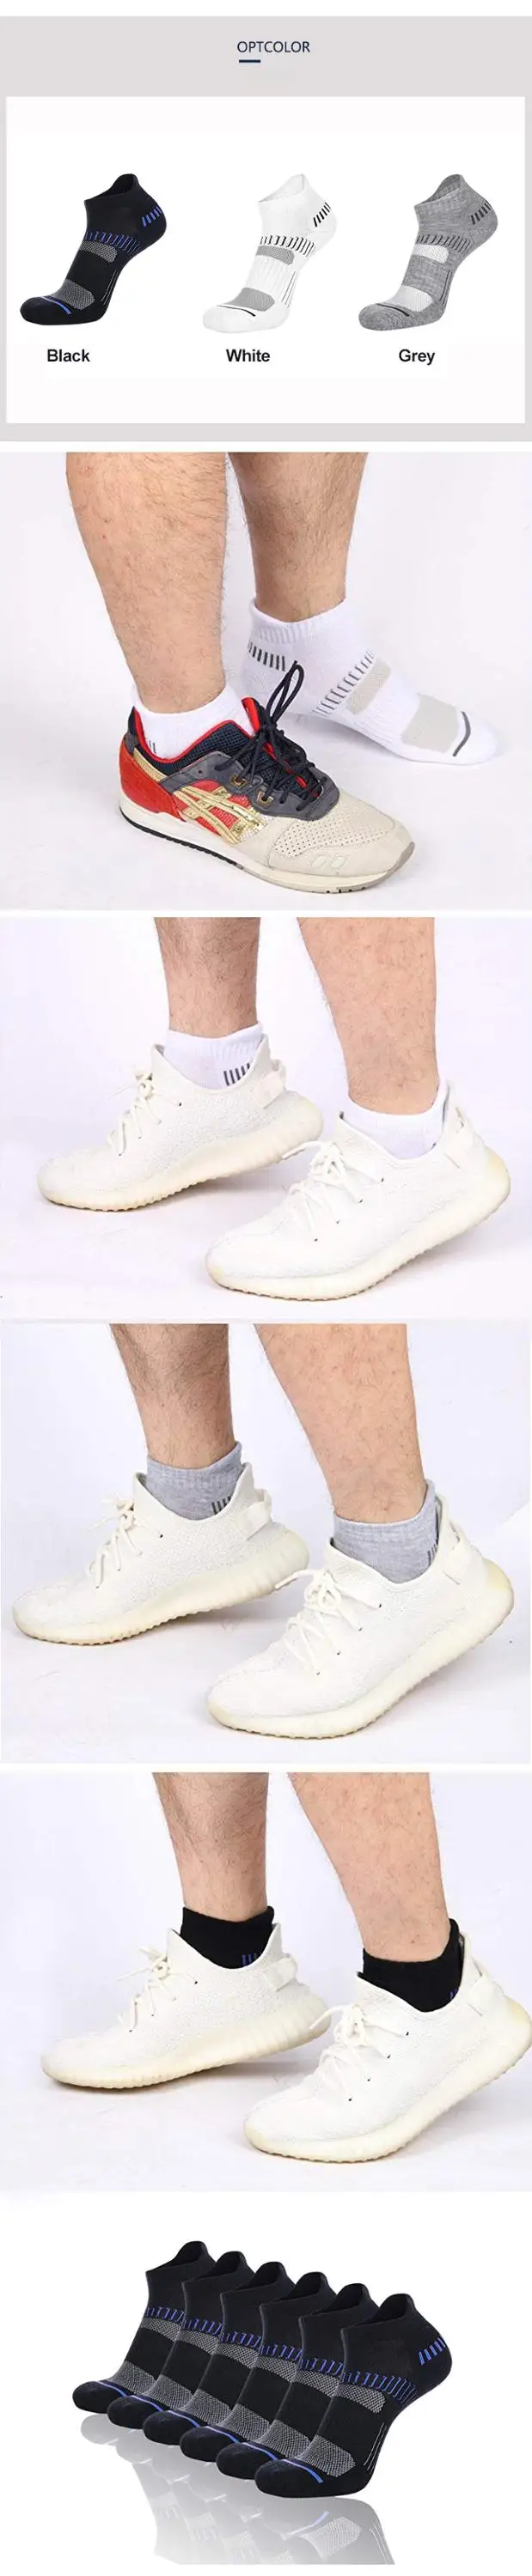 Enerup Dry Fit Compression Foot Purple Glitter Unisex For Men Cartoon Custom Tens Low Cut Ankle Socks